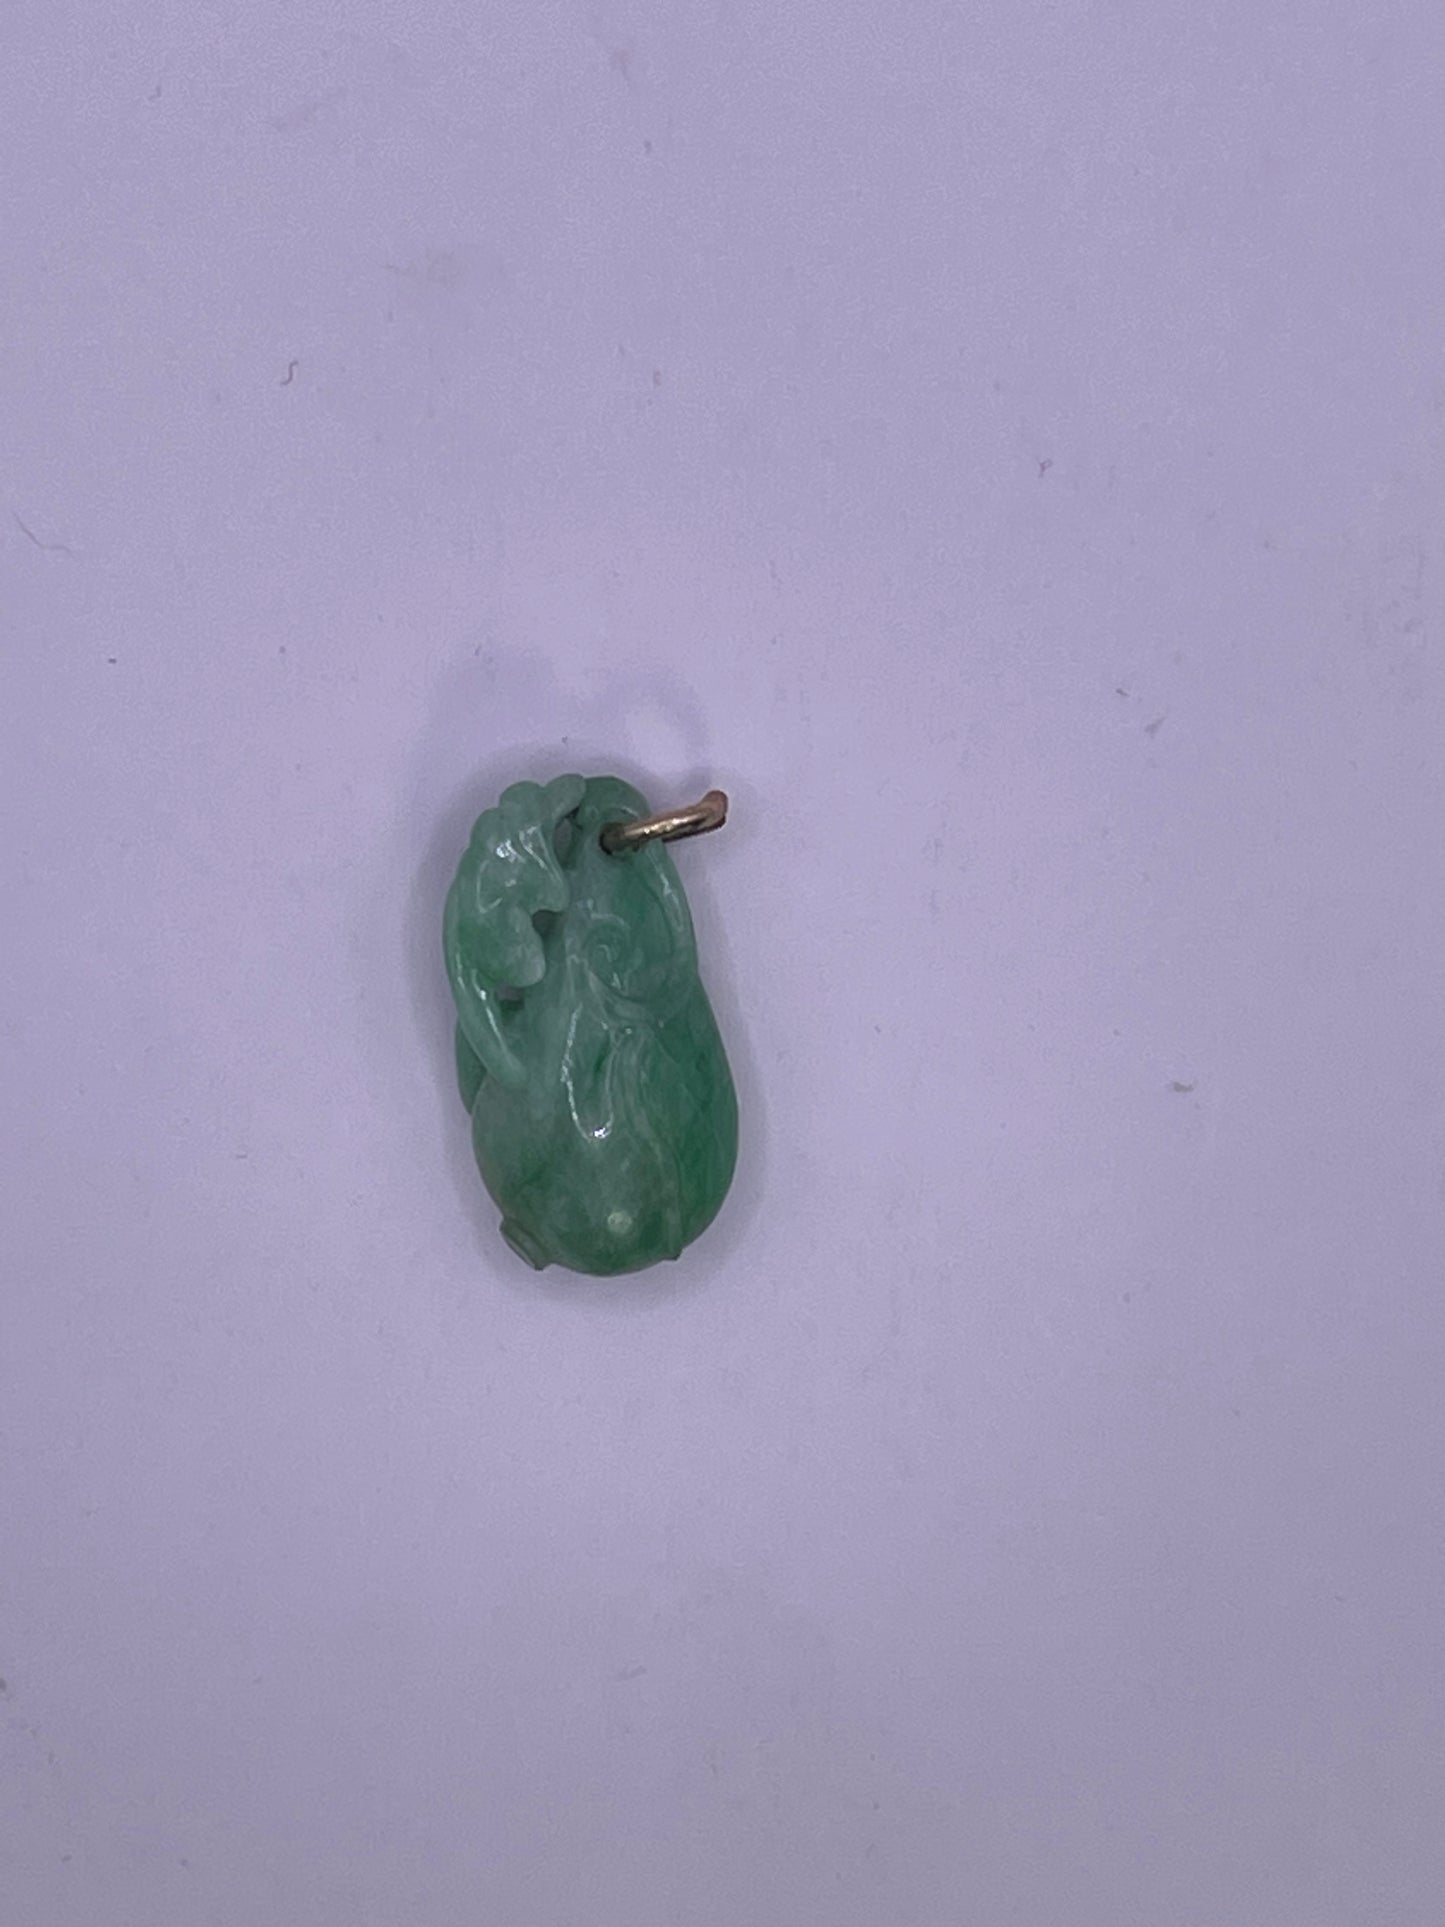 A jade plaque pendant